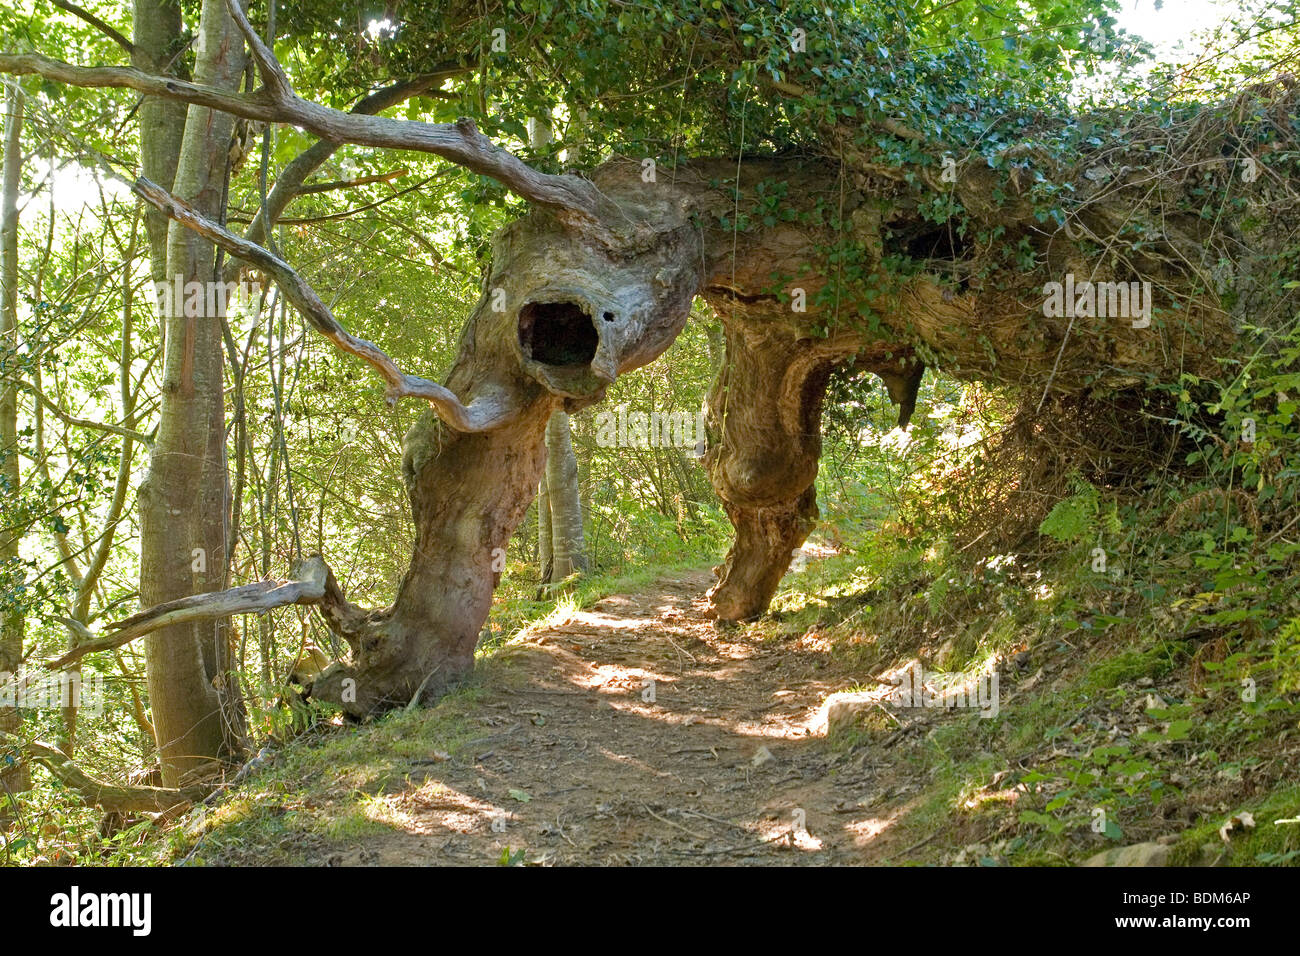 Spettacolo inconsueto: sradicato albero gigante (Pirenei Atlantiques- Francia). Une curiosité naturelle: l'arbre géant déraciné. Foto Stock